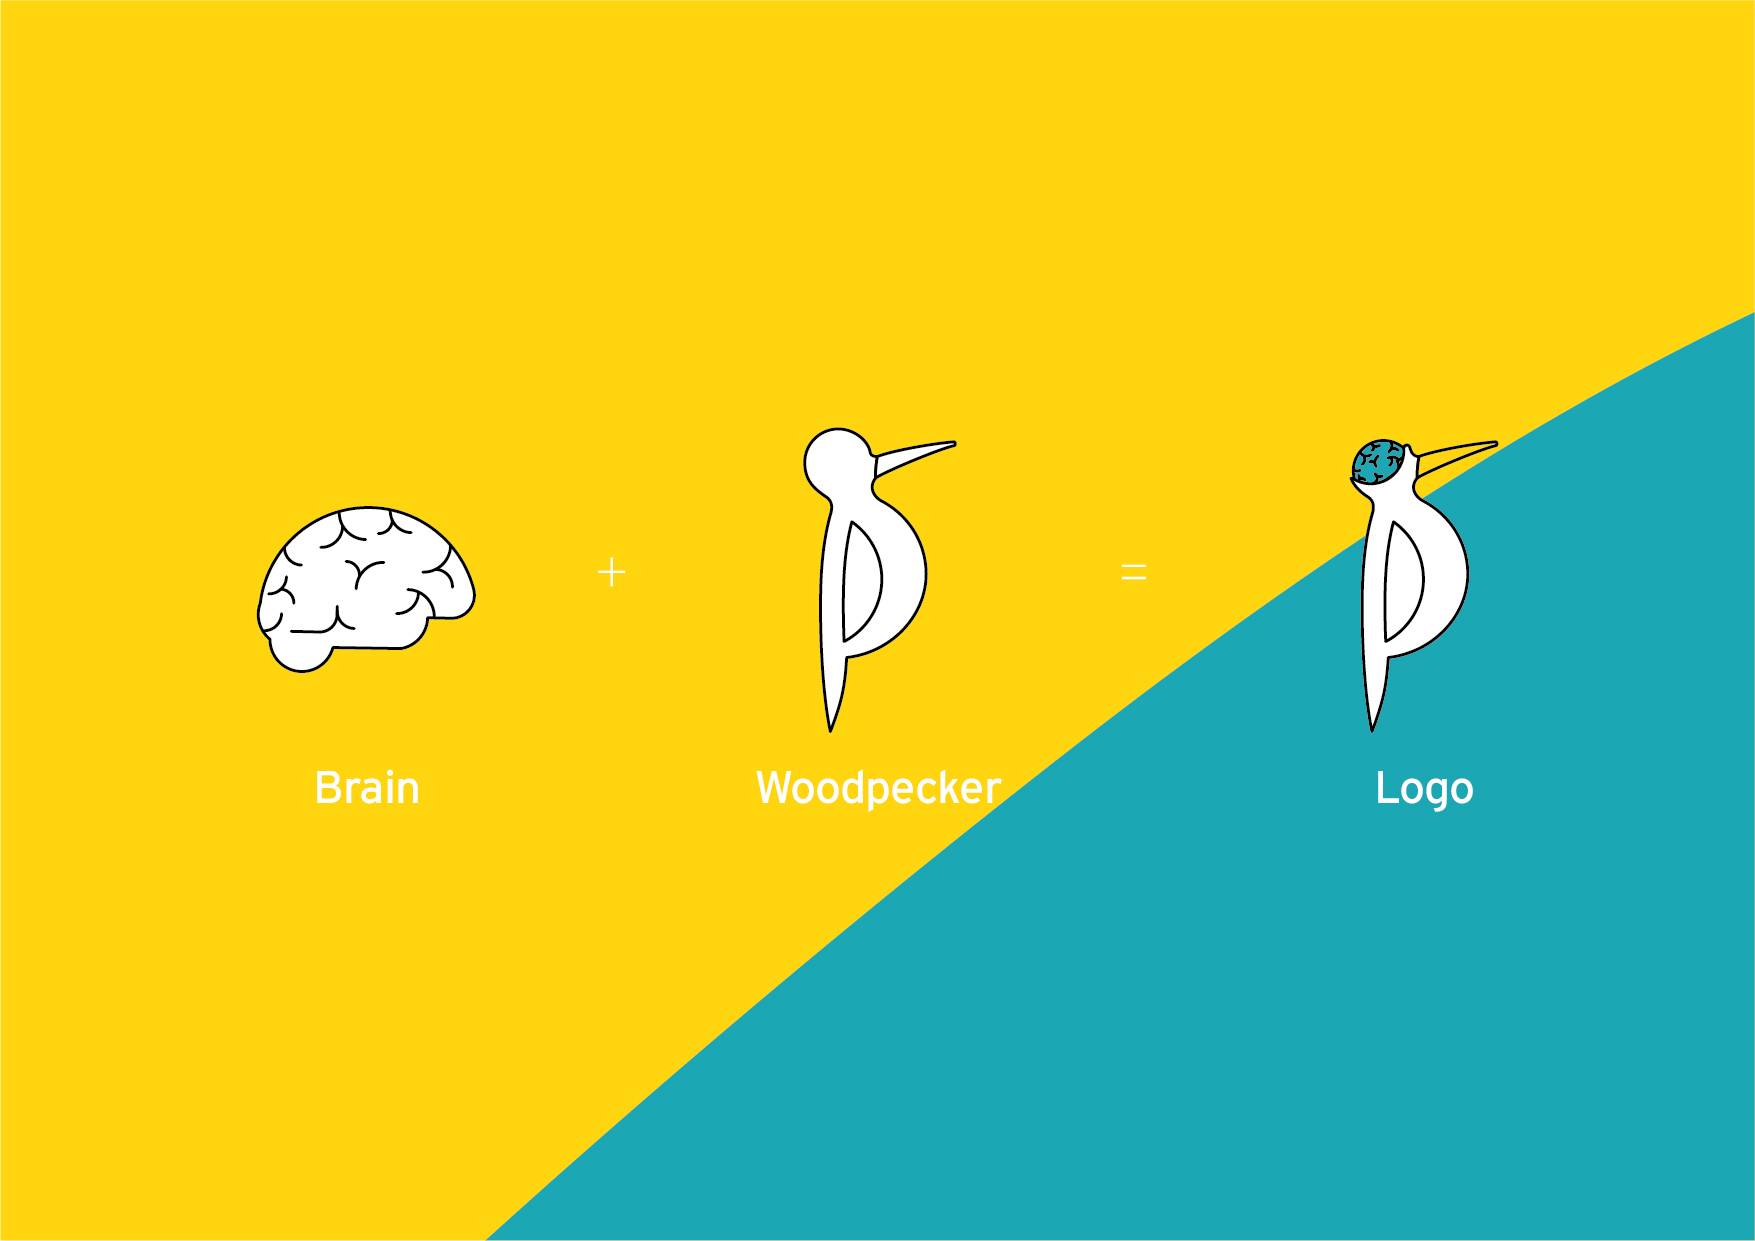  abc Education branding for brand logo concept as Woodpecker